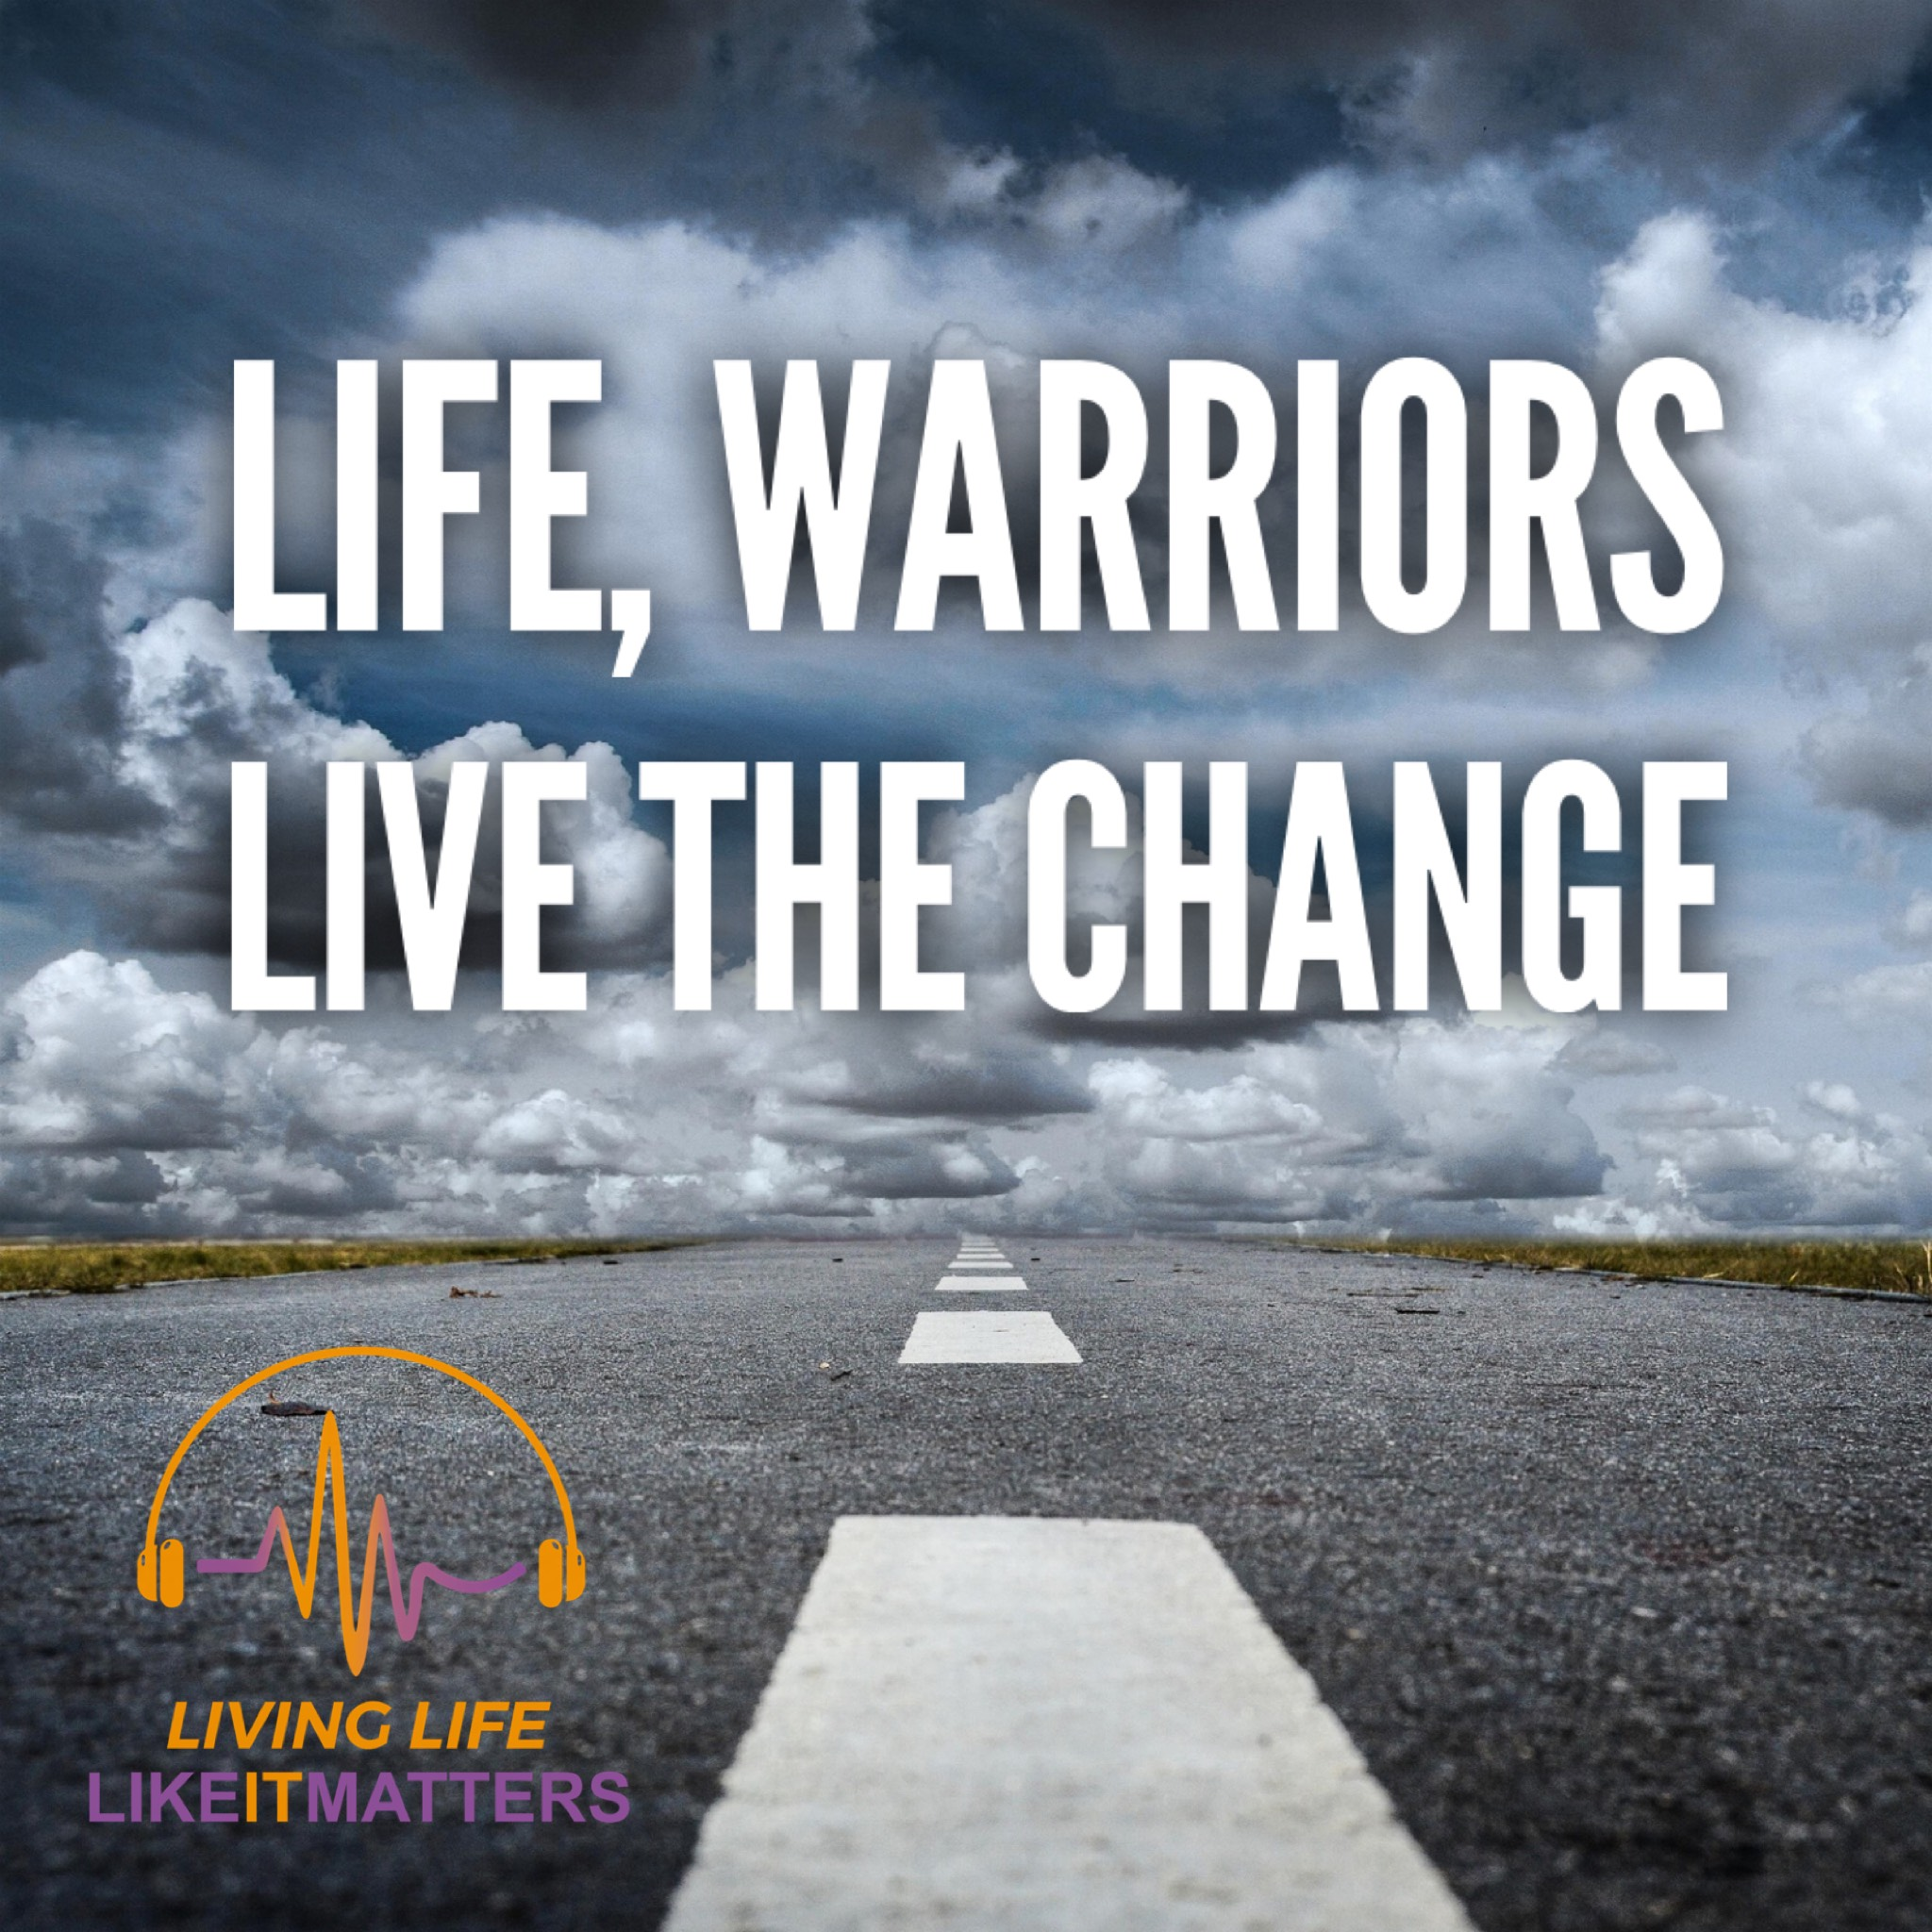 Life, Warriors Live The Change